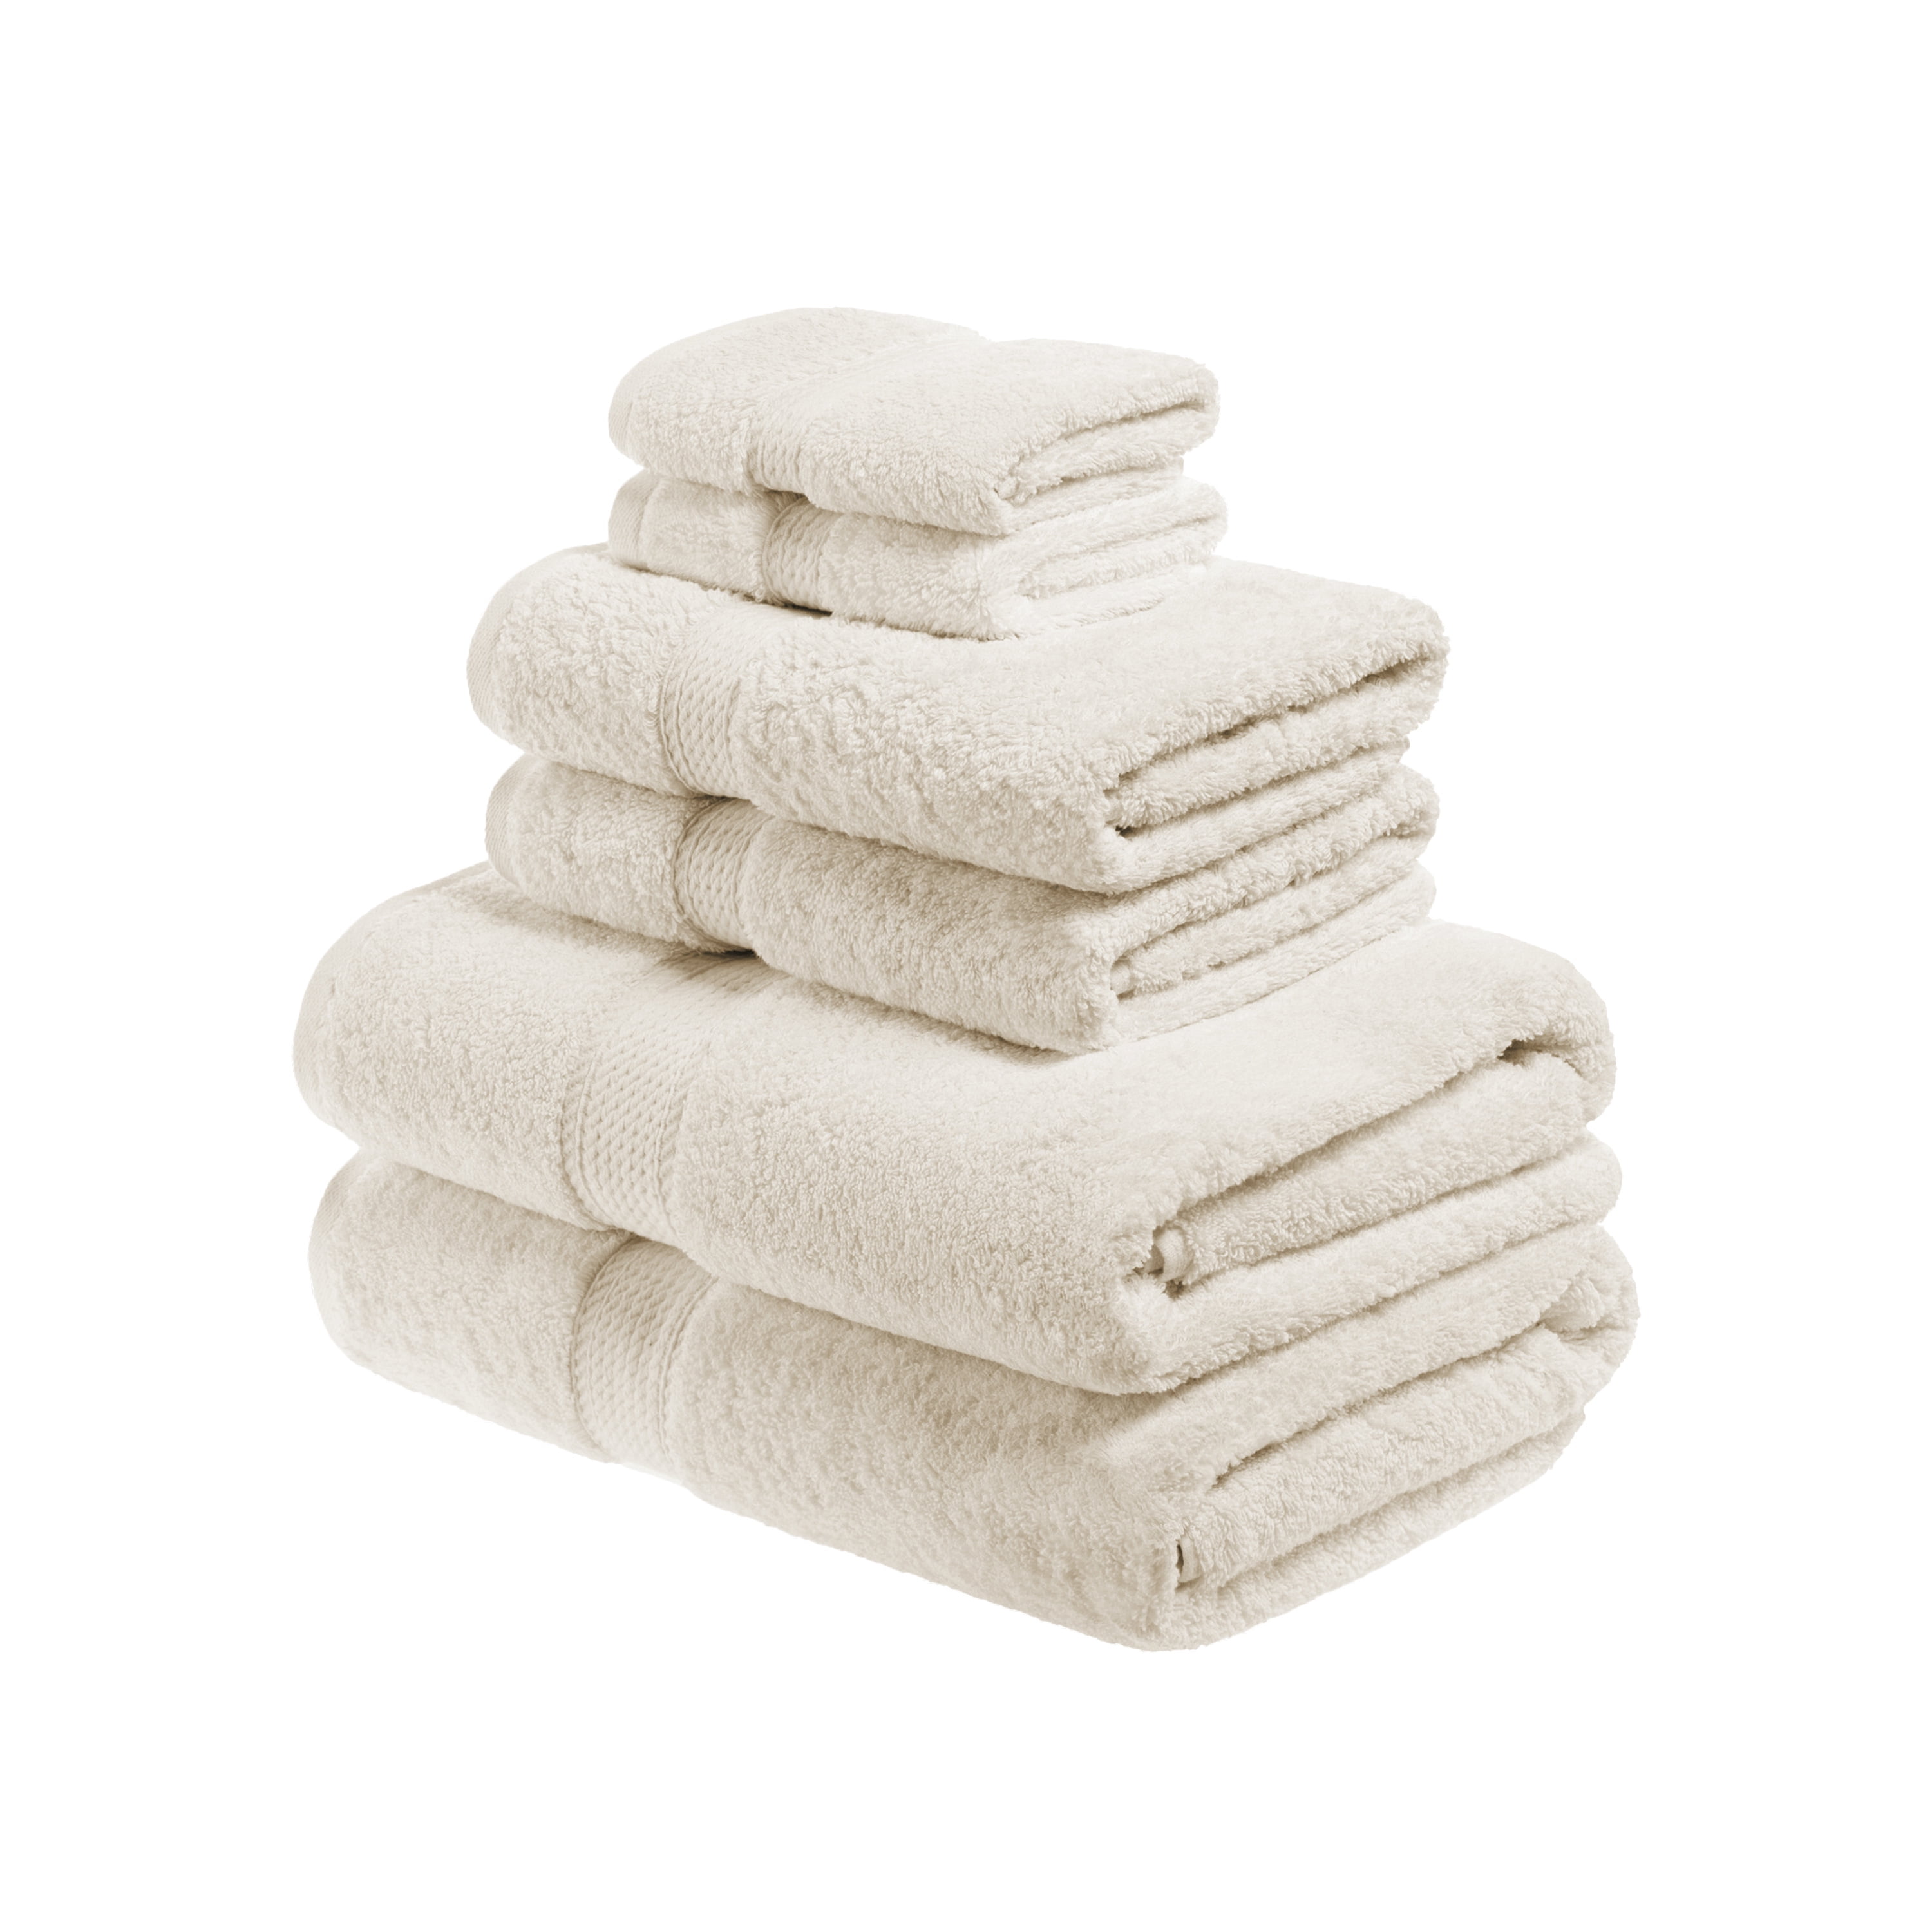 New Kensington 100% Egyptian Cotton Super Soft Face Hand Bath Towels Jumbo Sheet